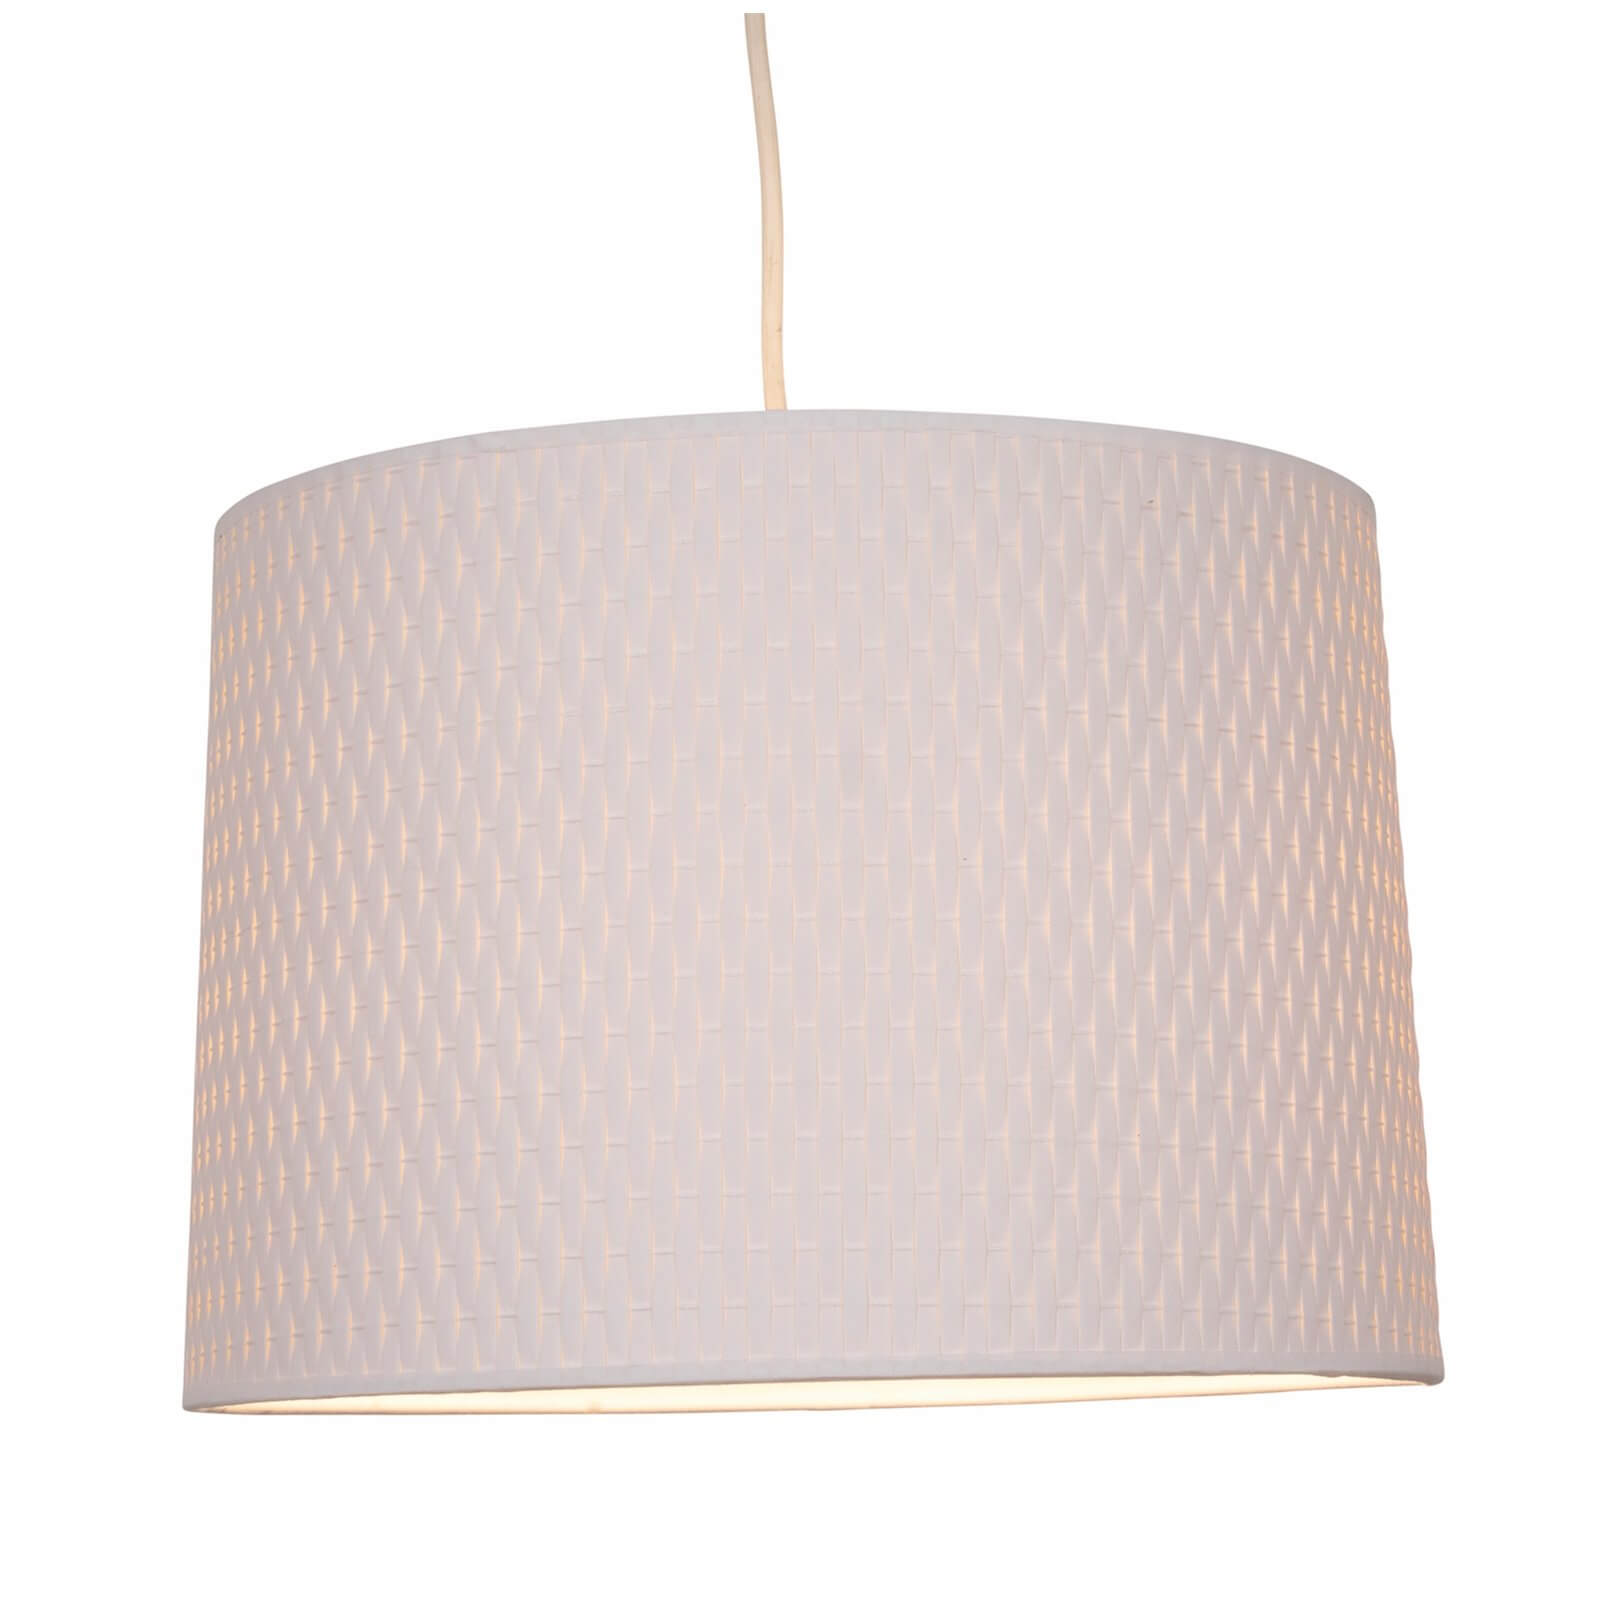 Cara Woven Paper Lamp Shade - White